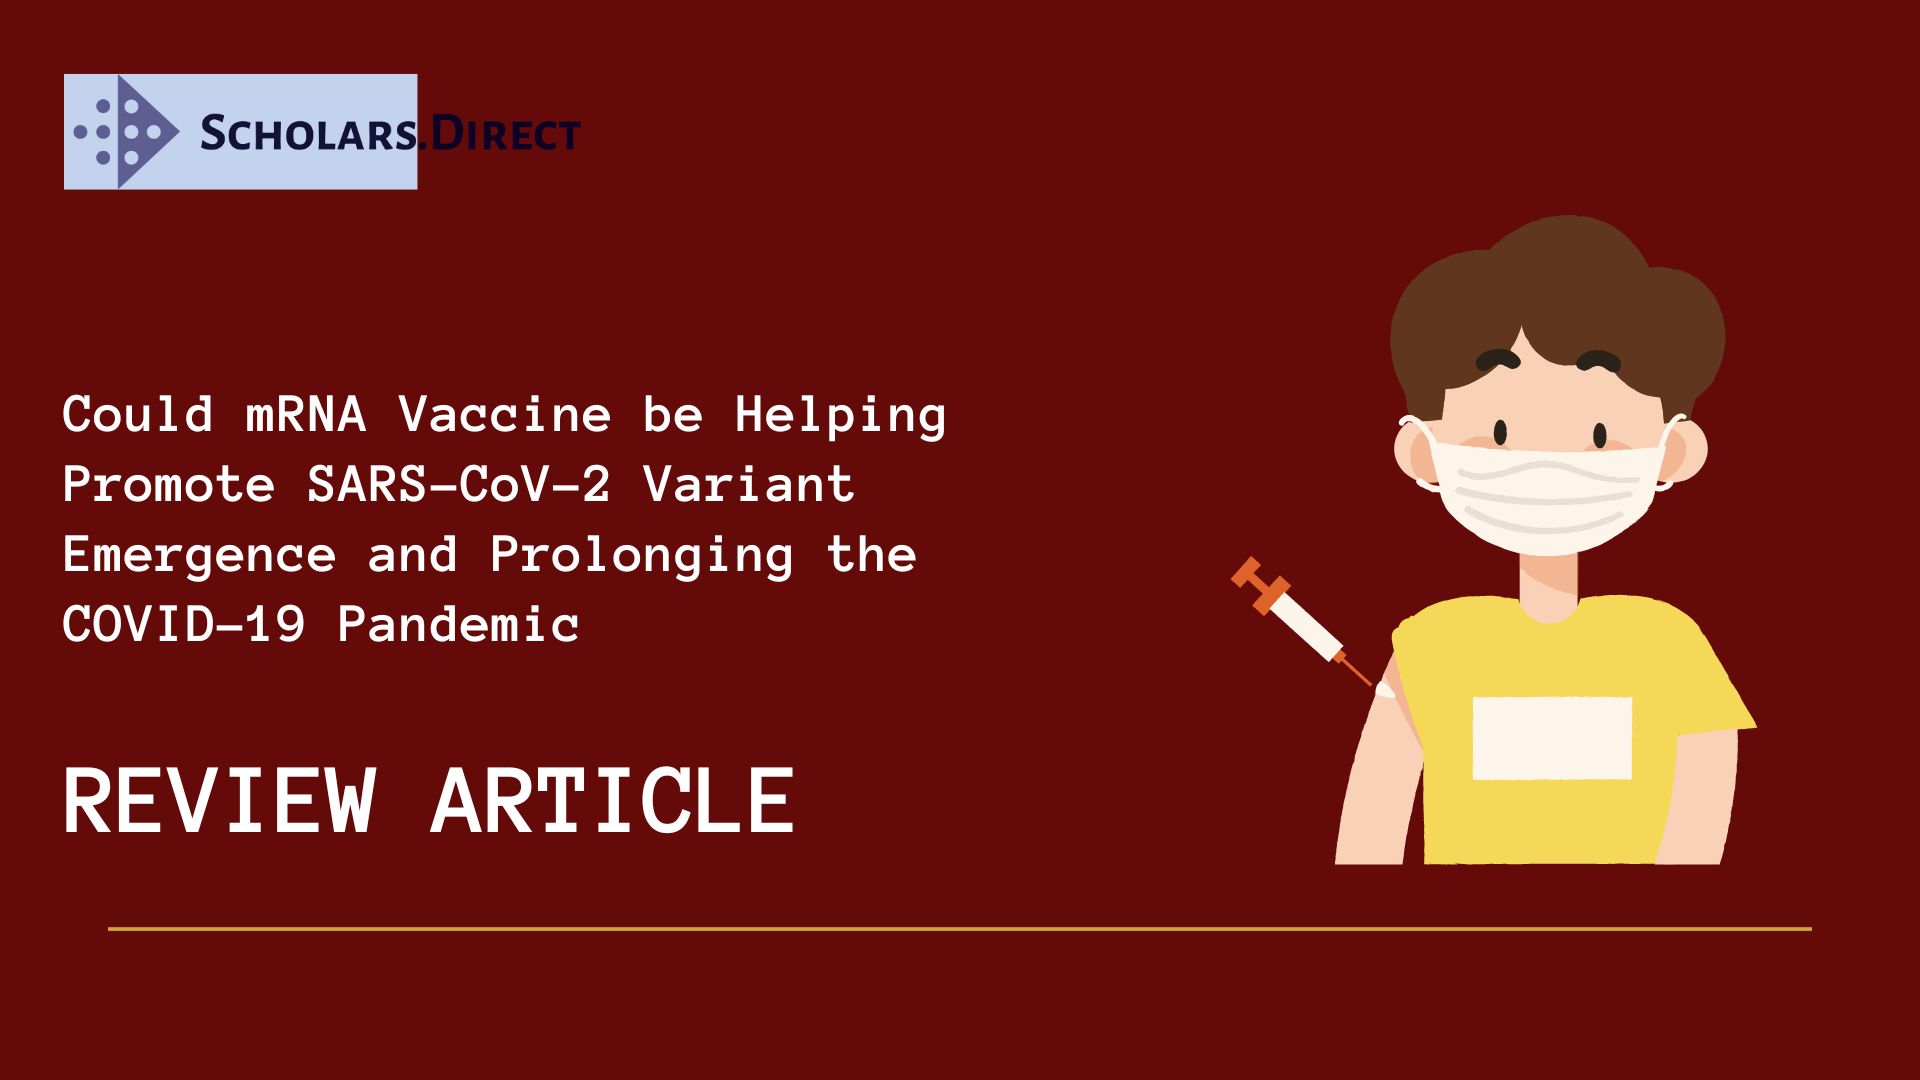 Journal of Vaccine Research & Development